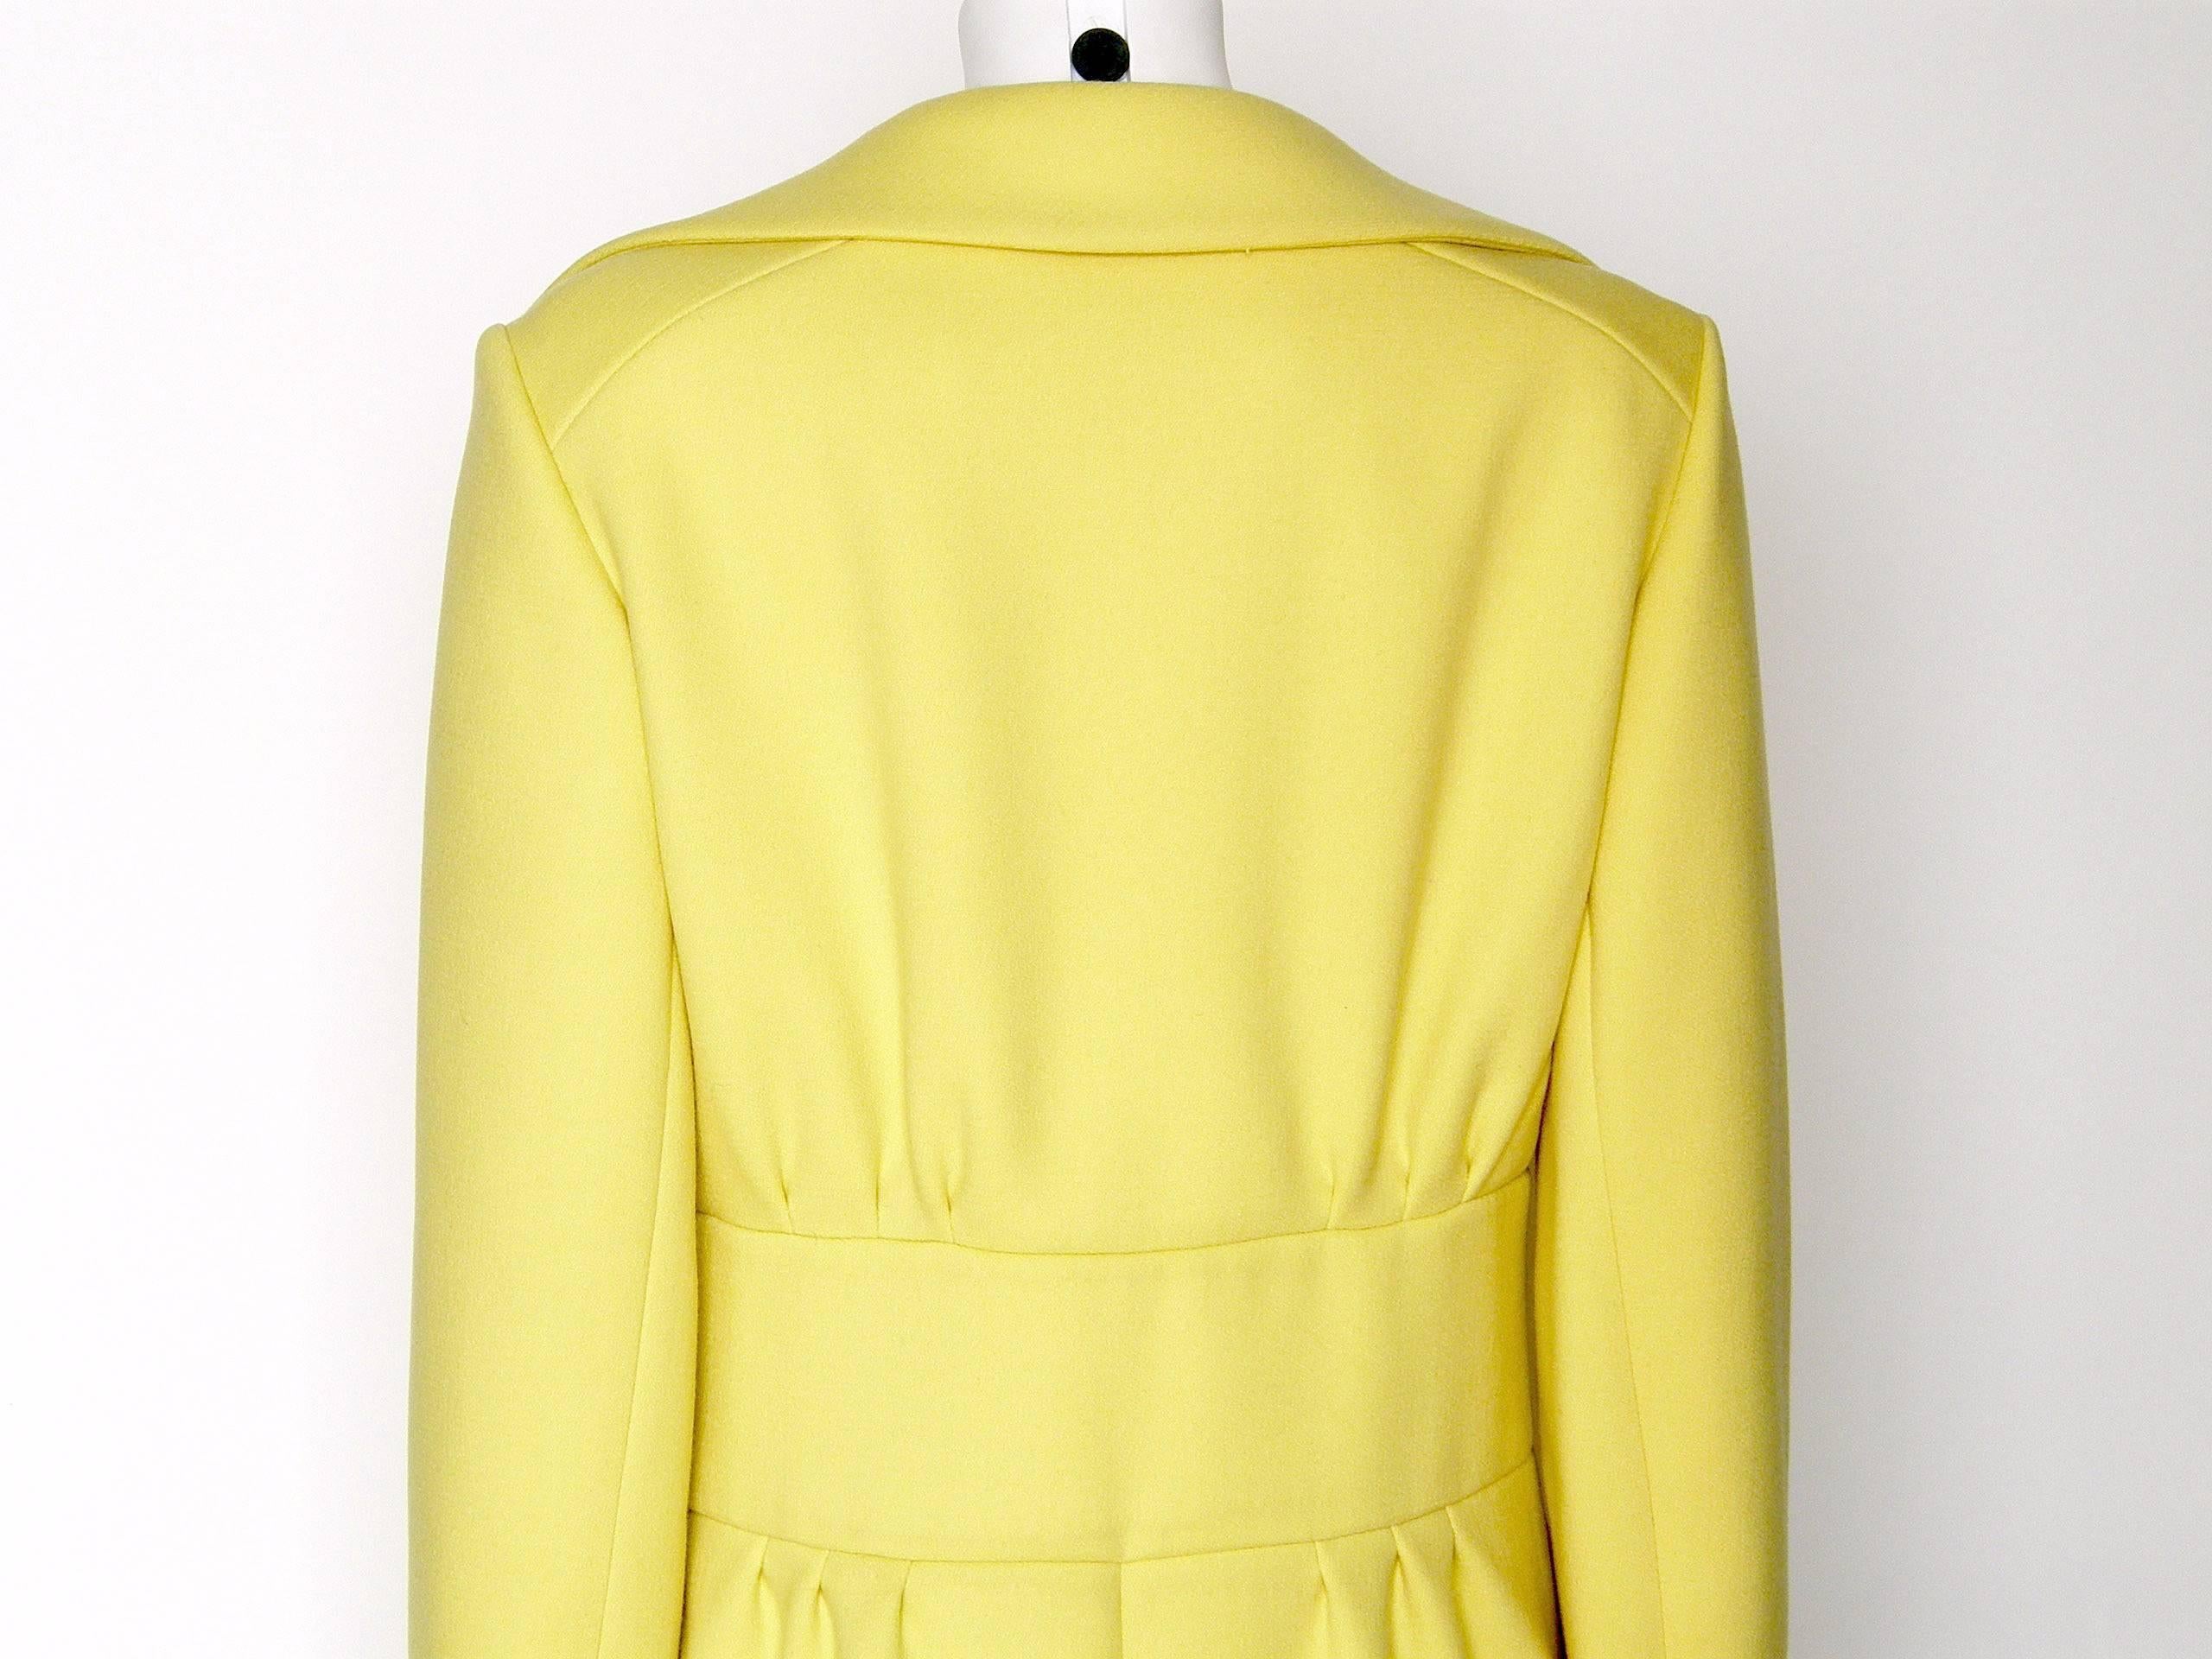 Mod Originala Coat Bright Yellow Wool with Tie Waist 3